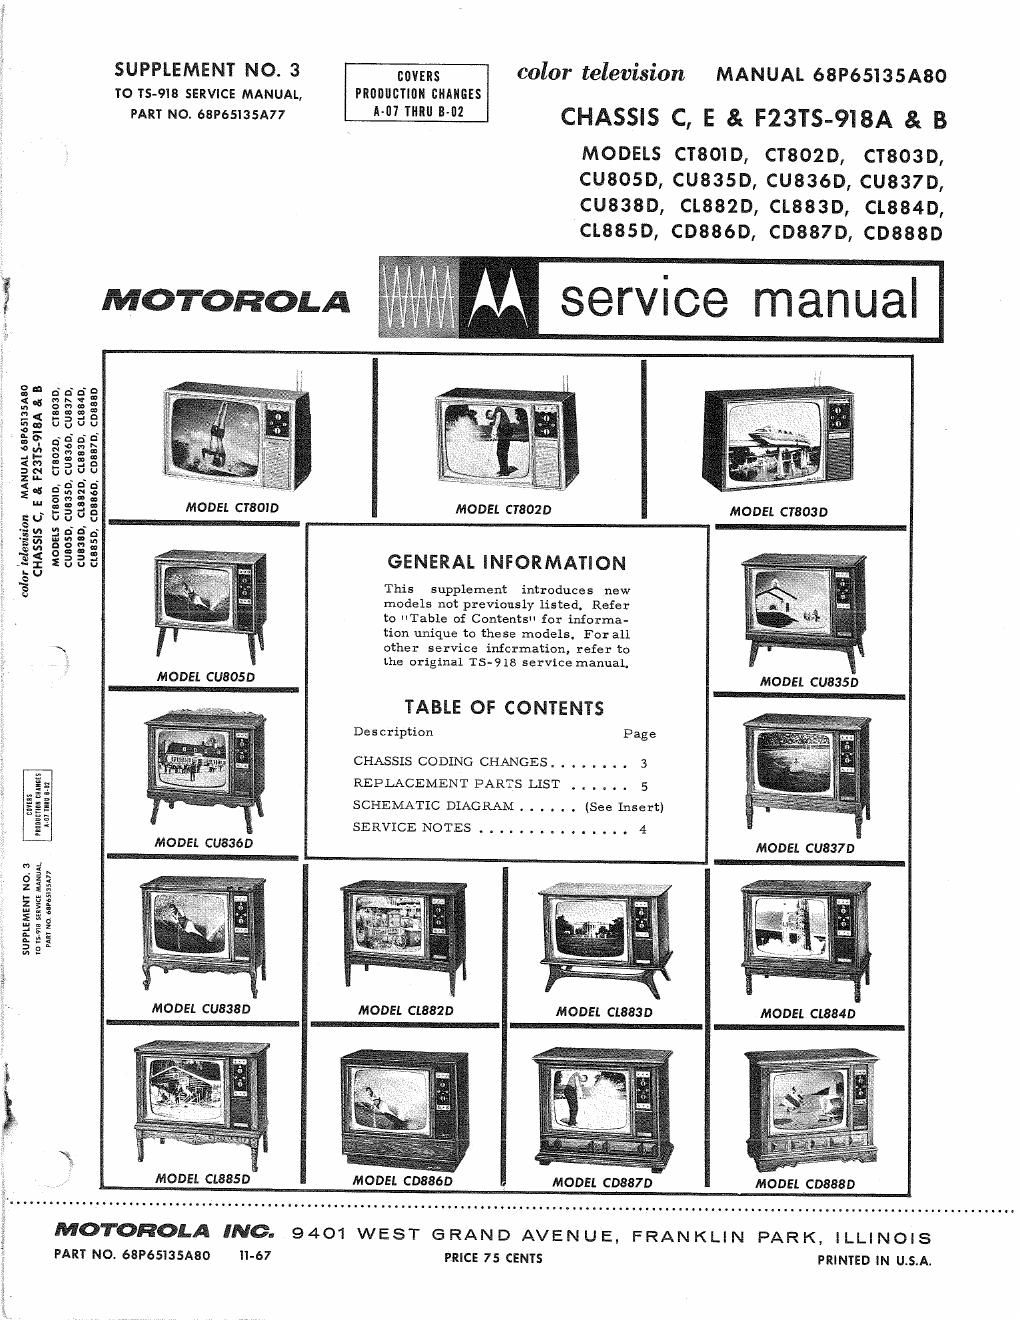 motorola cd 887 d service manual